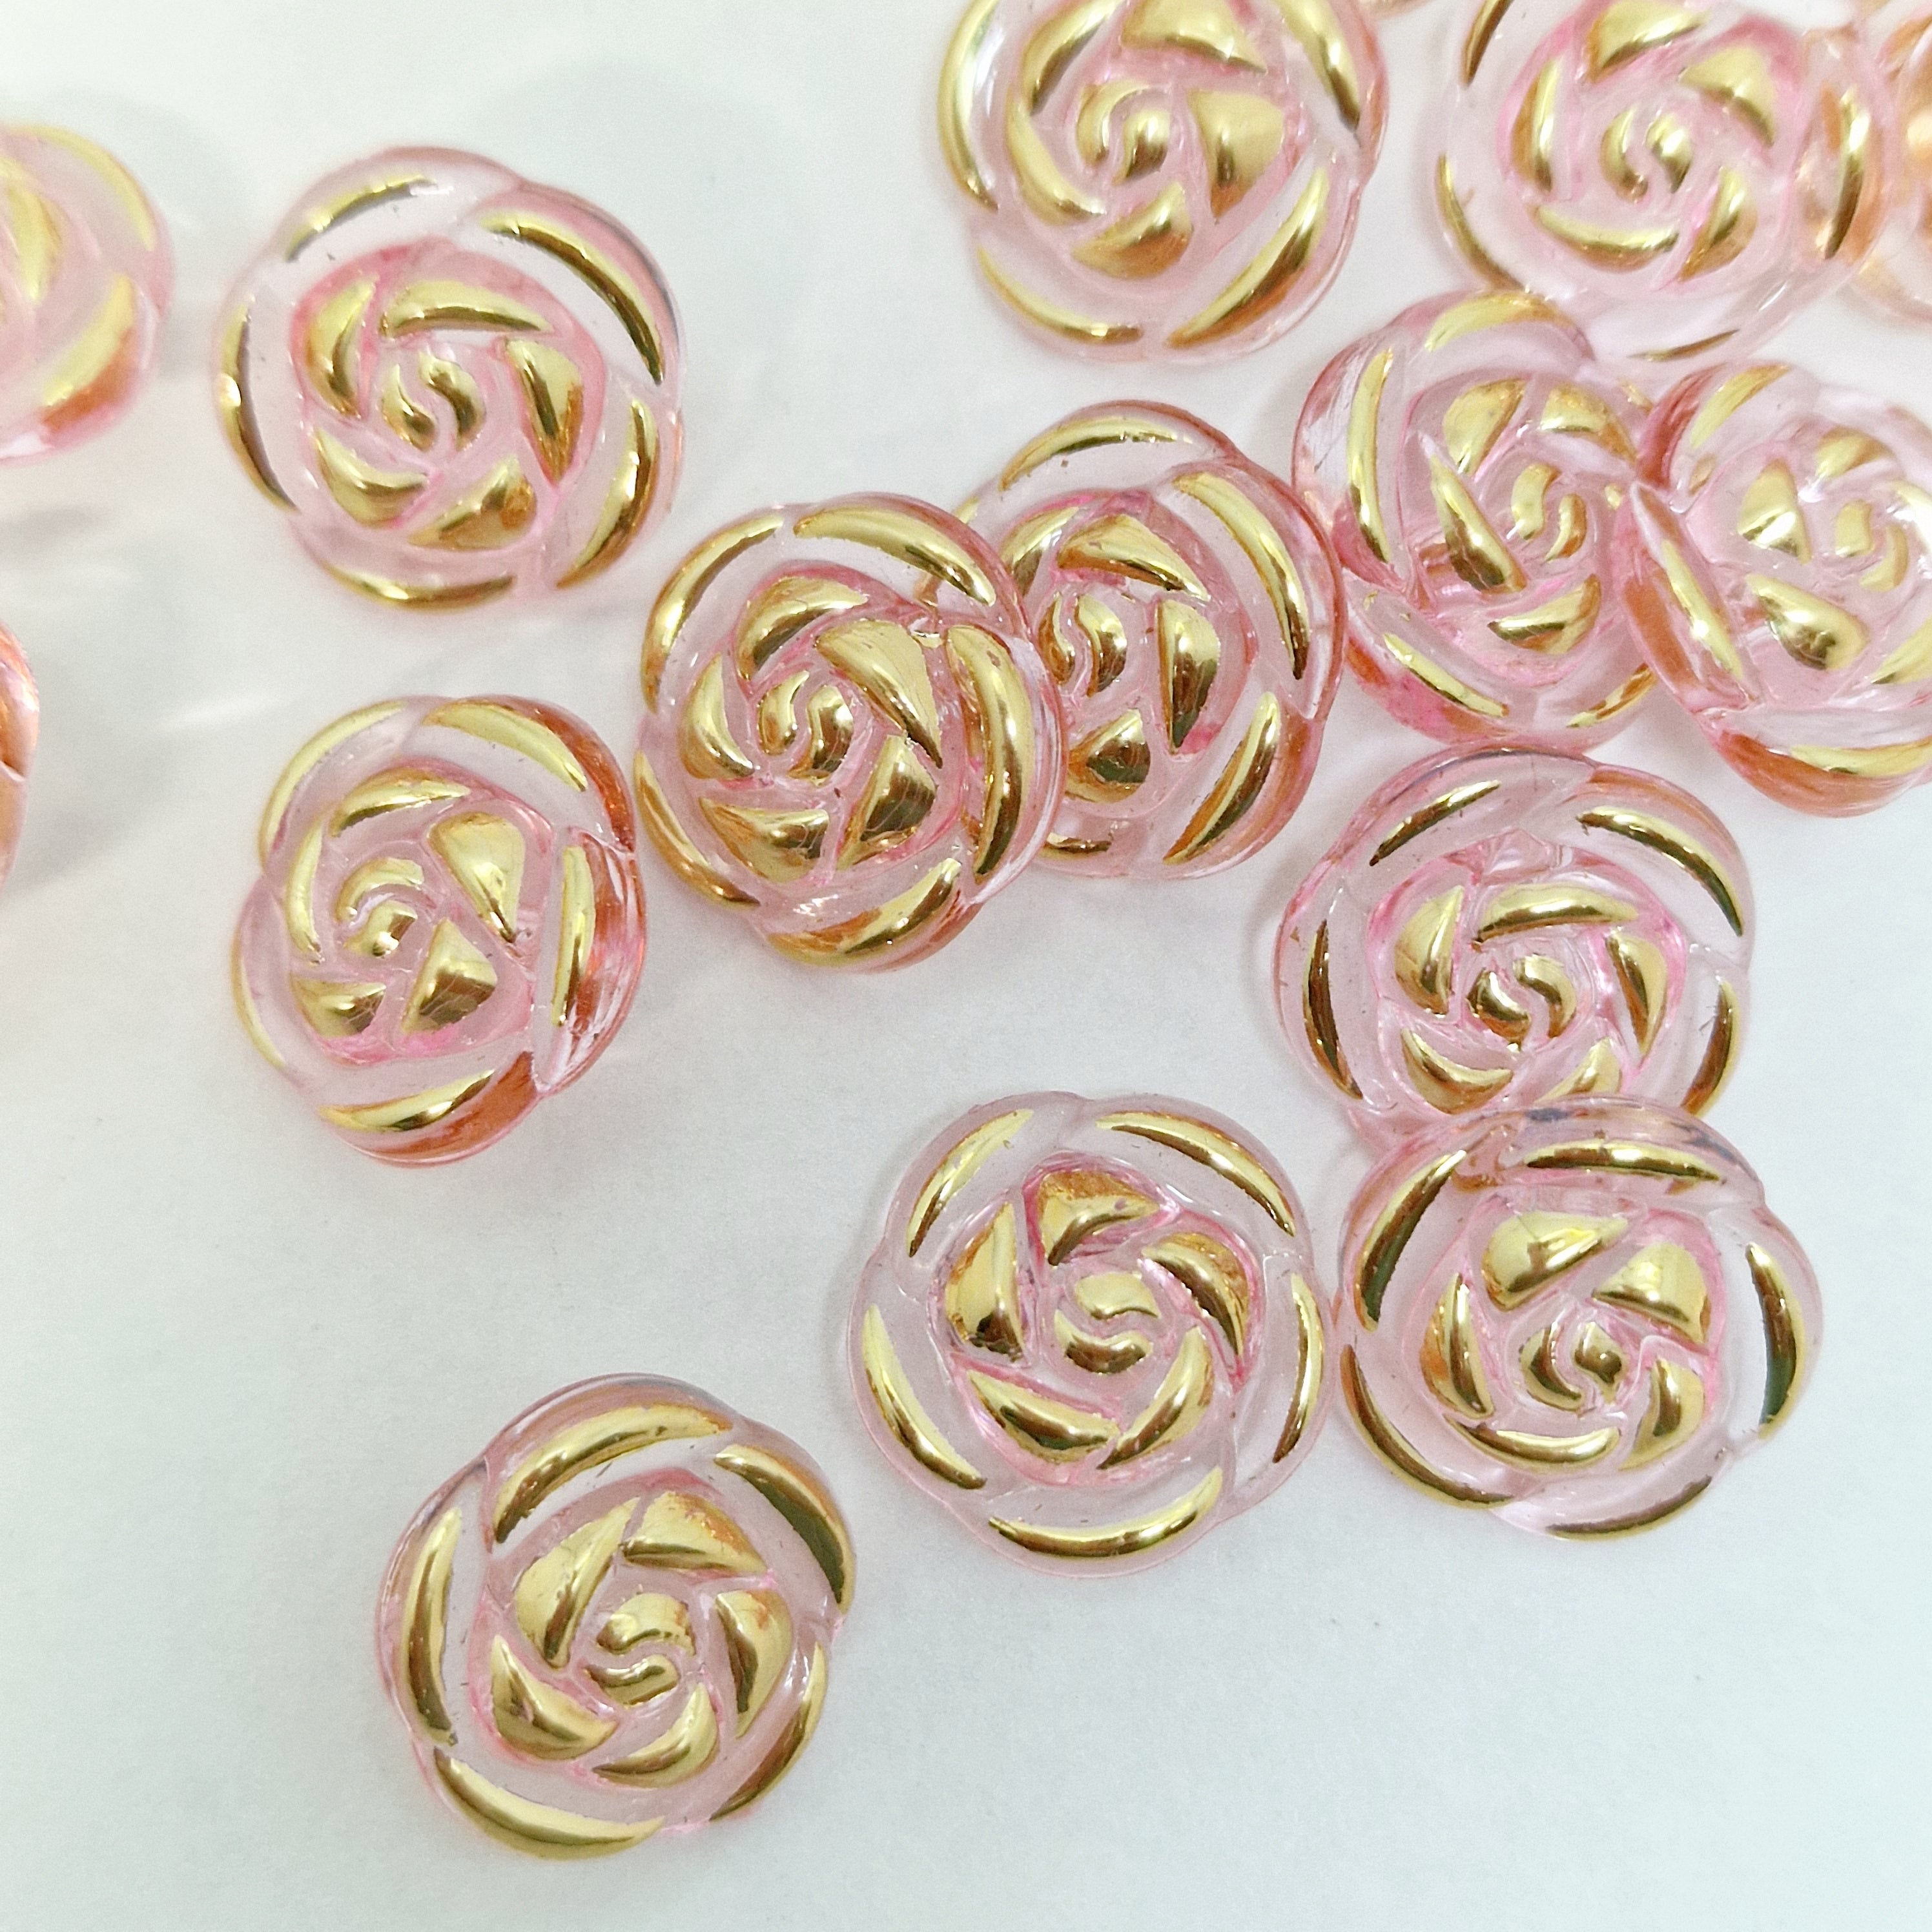 MajorCrafts 40pcs 13mm Light Pink & Gold Rose Flower Shank Resin Buttons